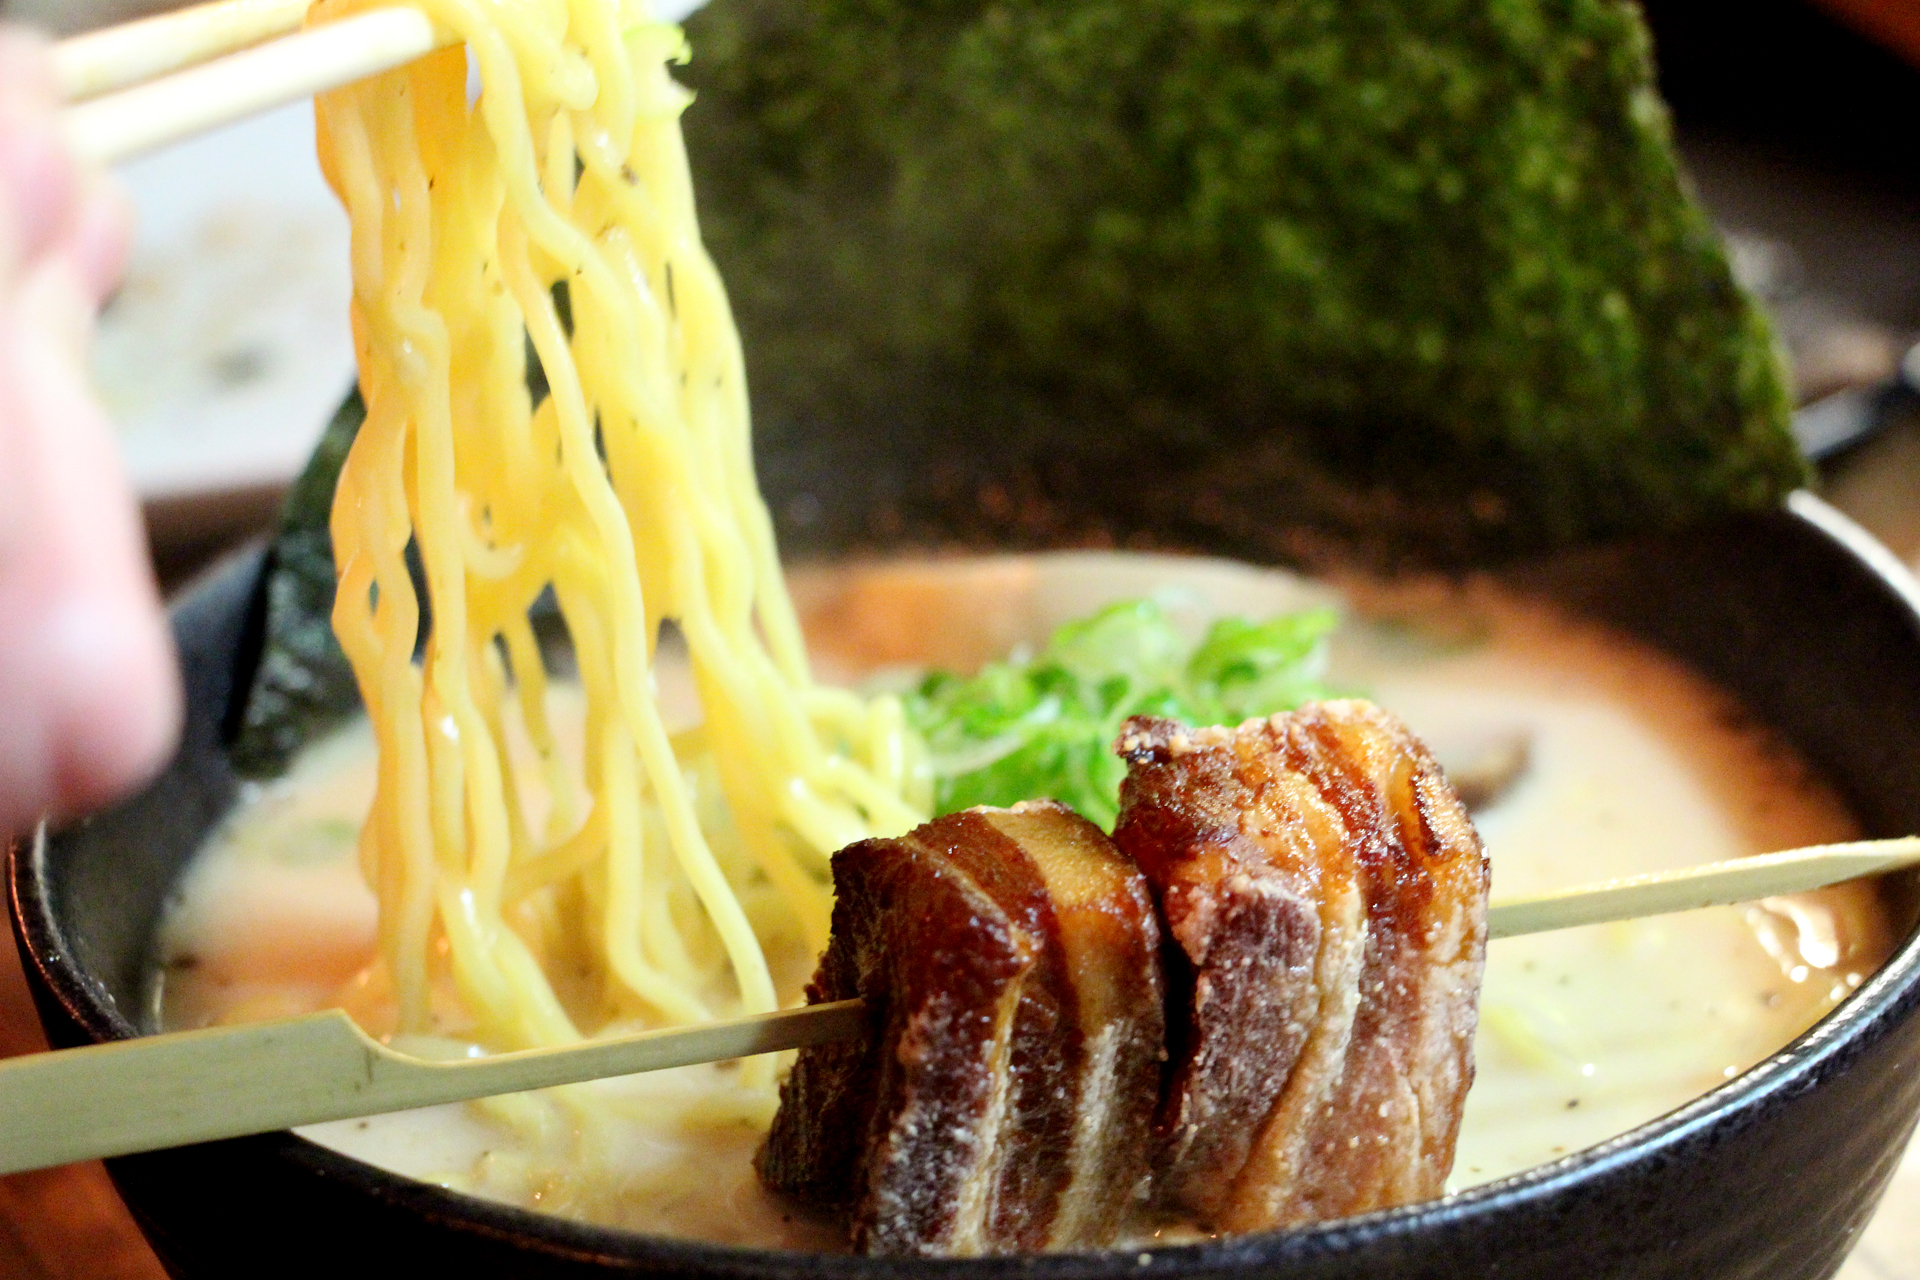 Izakaya Sozai's ramen tonkotsu bowl with fried braised pork belly.